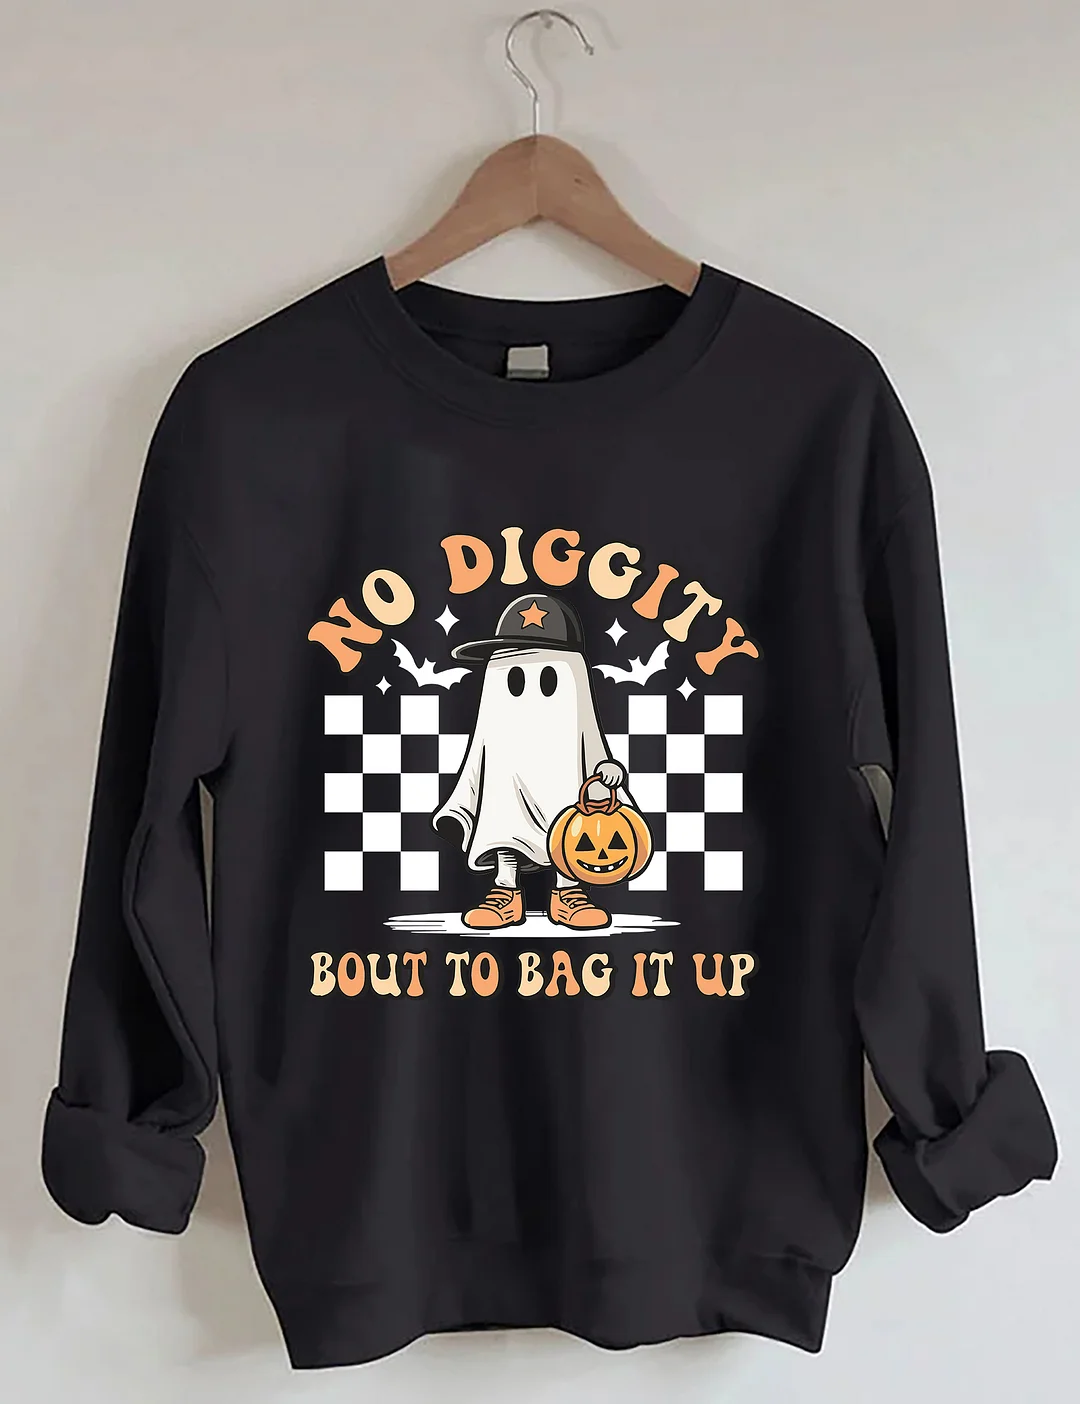 No Diggity Bout To Bag It Up Sweatshirt